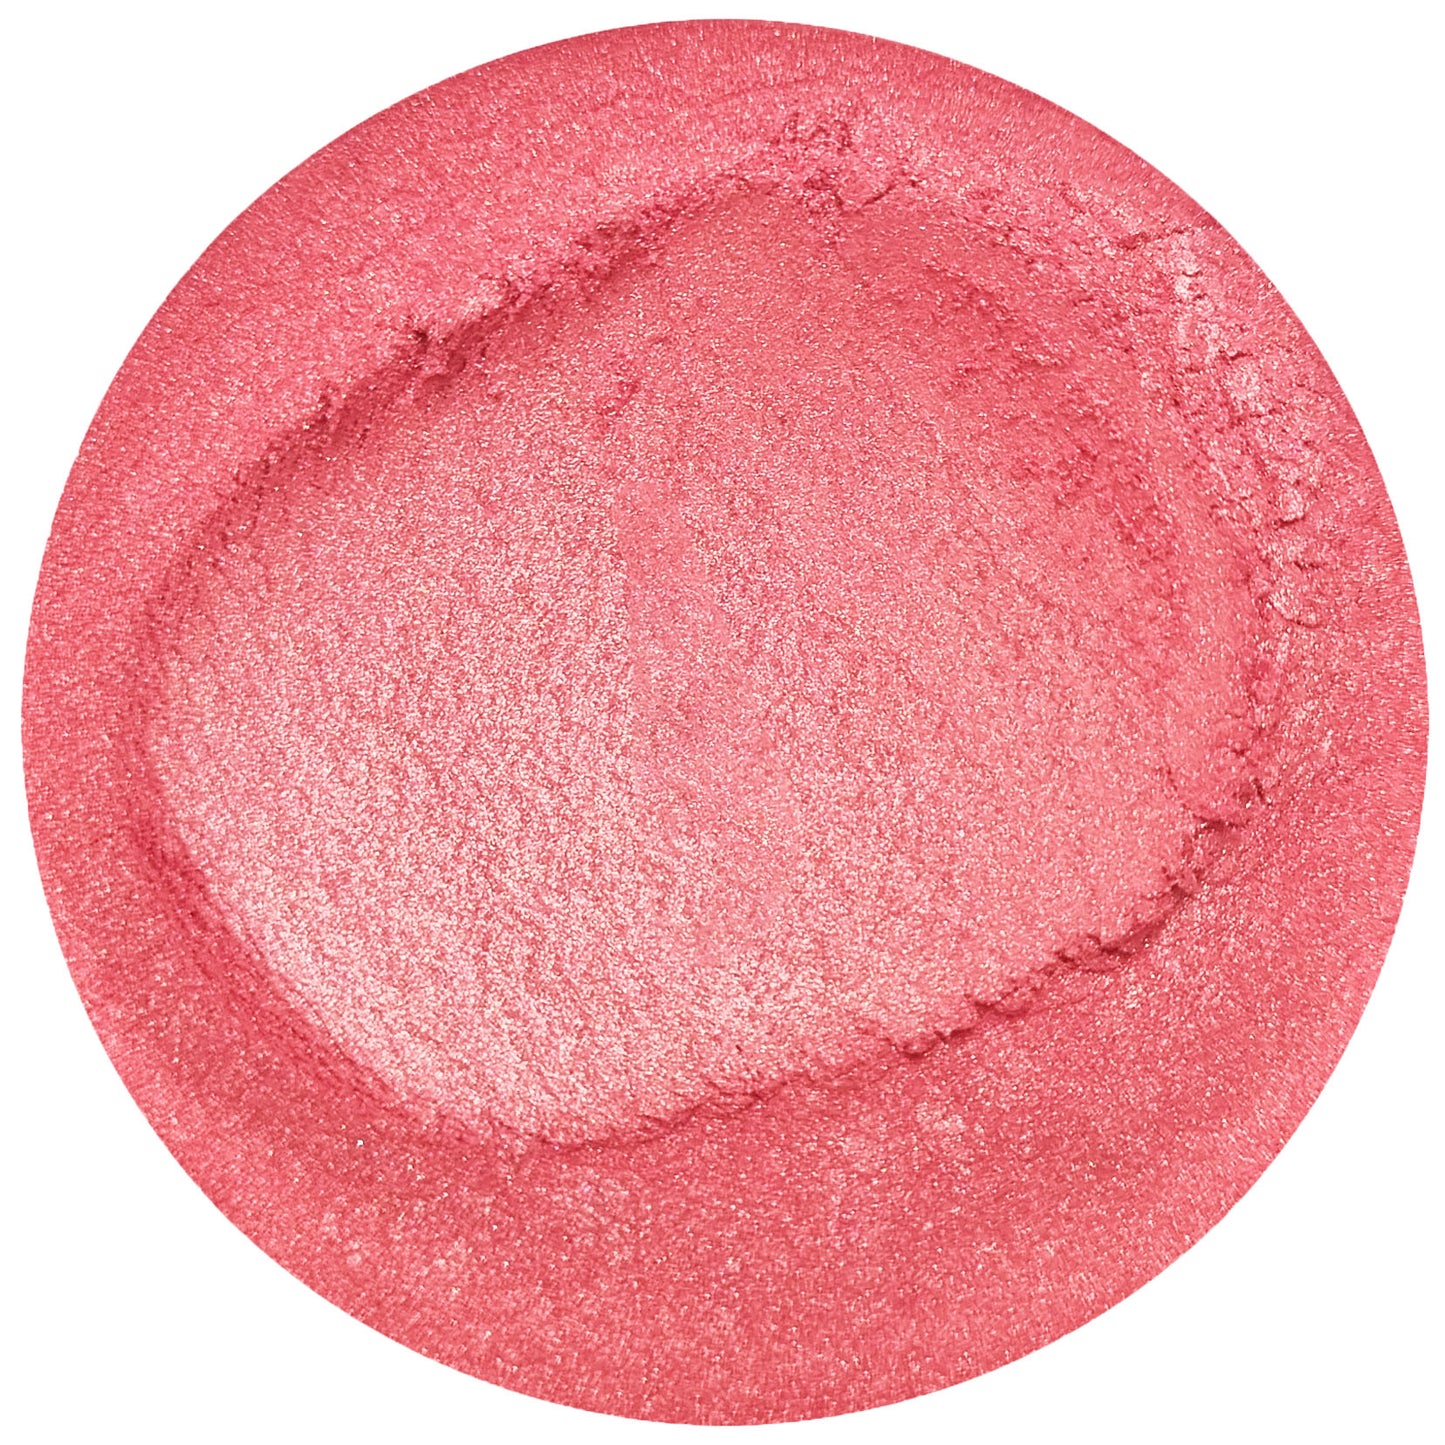 Silken Deep Rose | Pearlescent Cosmetic Mica | Truly Personal Ltd | Wax Melt Glitter